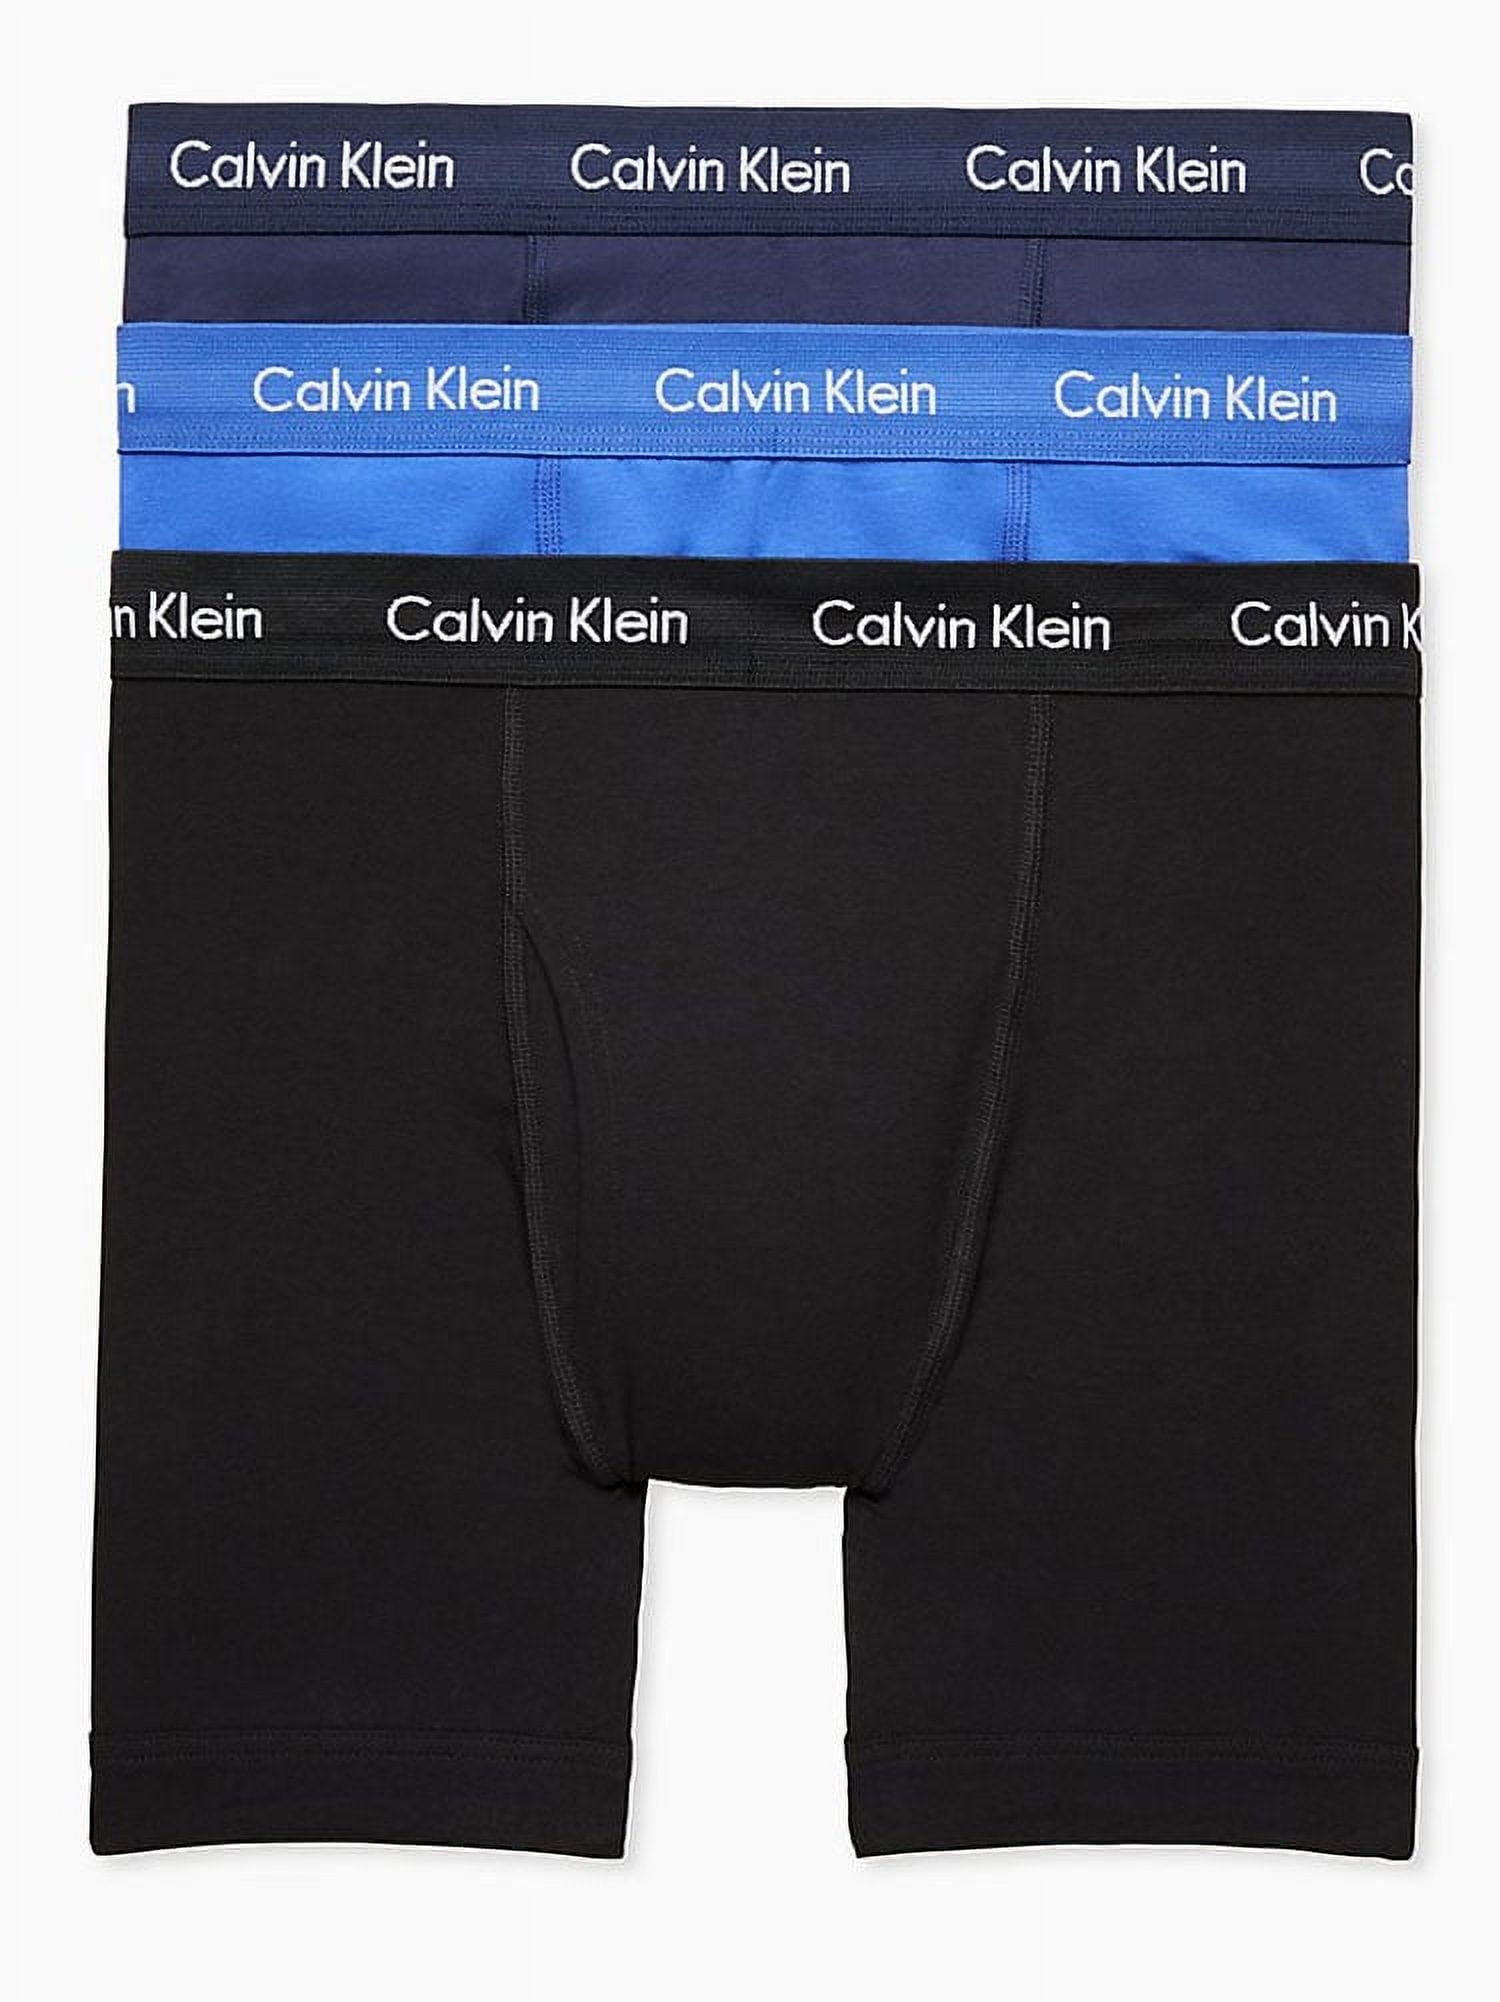 Calvin Klein Men's Cotton Stretch Multipack Boxer Briefs,, Black